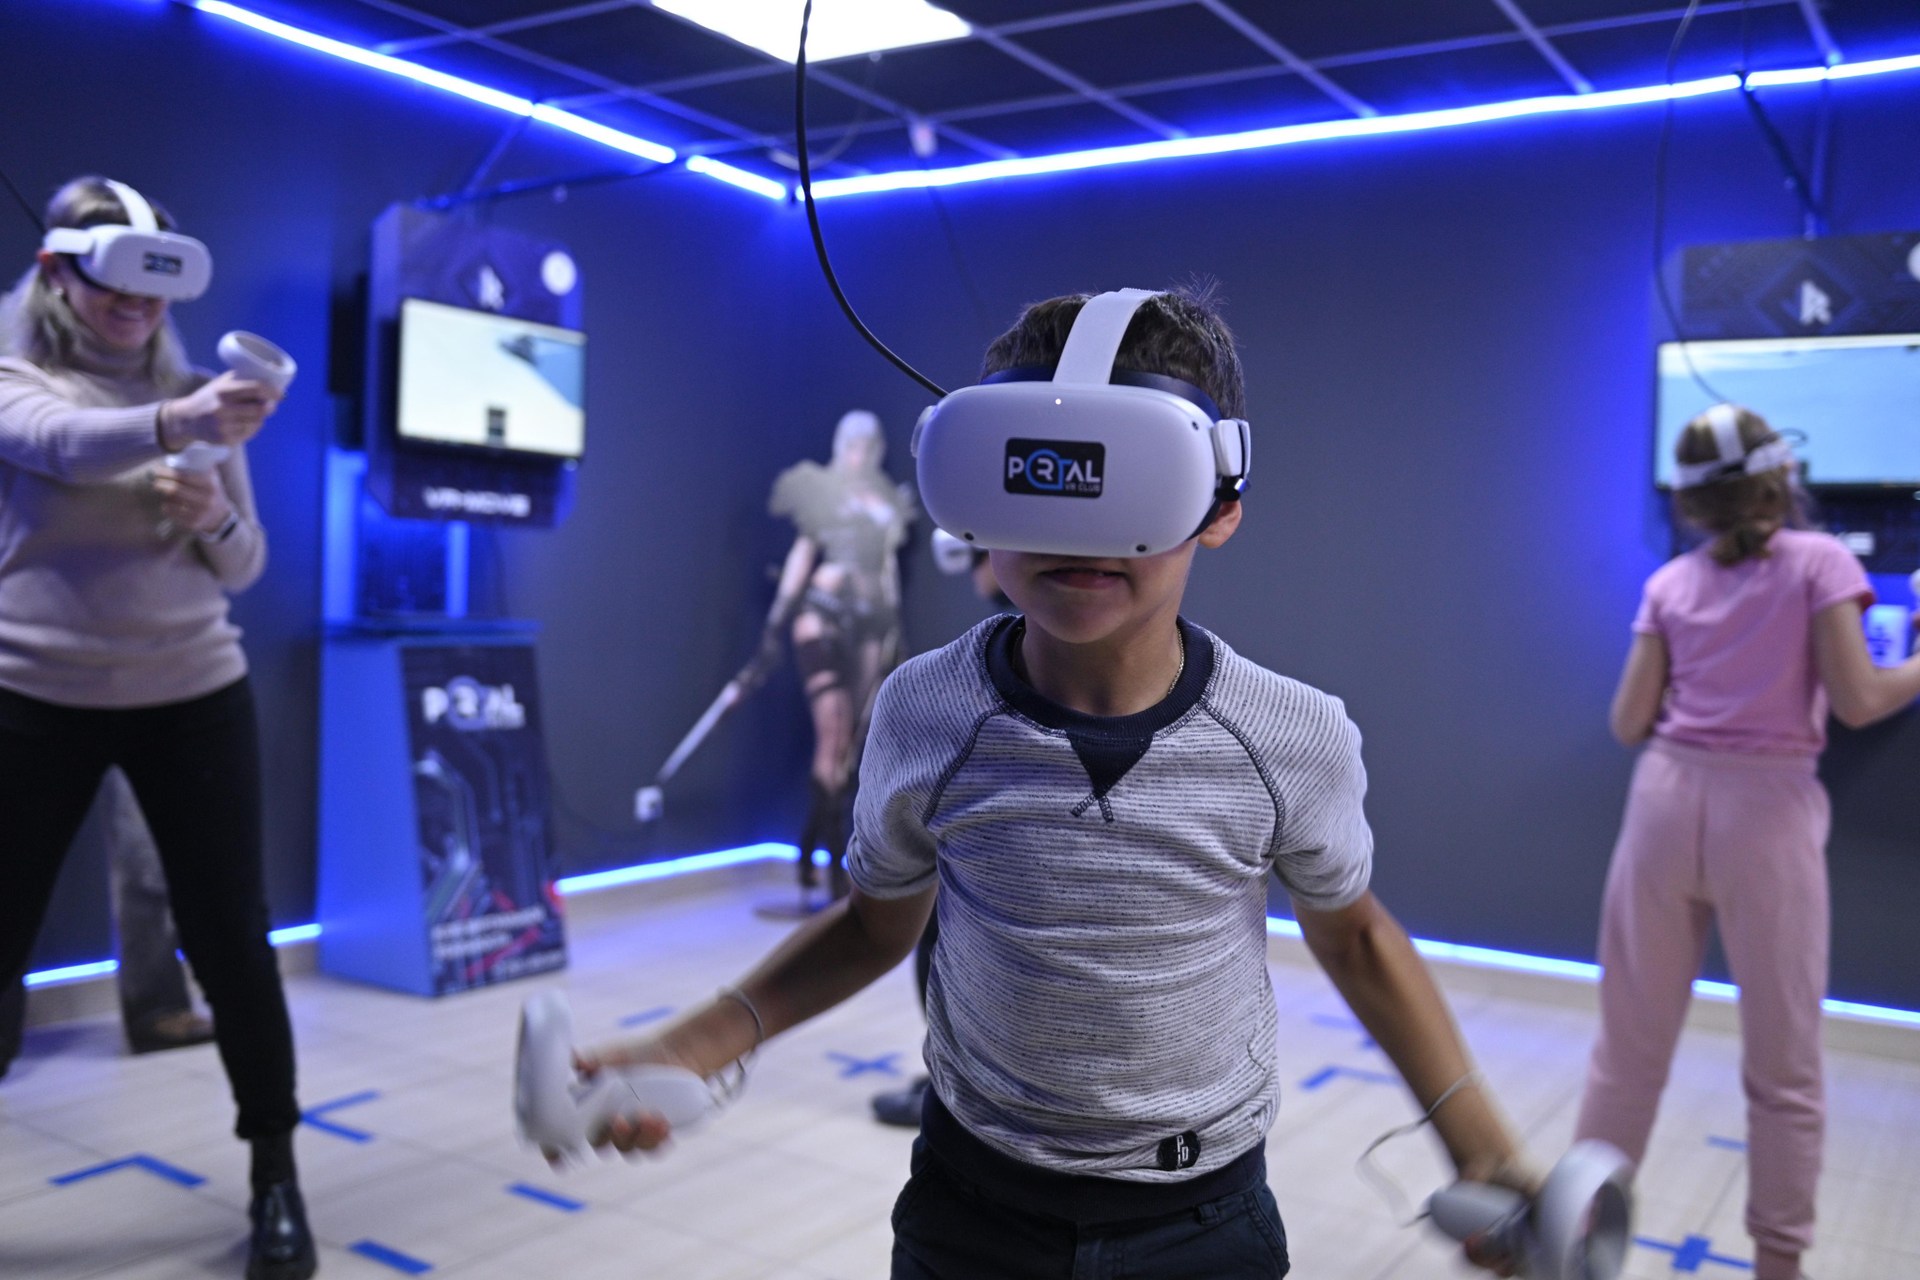 Vr club vrpark. Клуб виртуальной реальности Абакан. Портал VR. Клуб виртуальной реальности Portal VR. VR клуб Абакан.